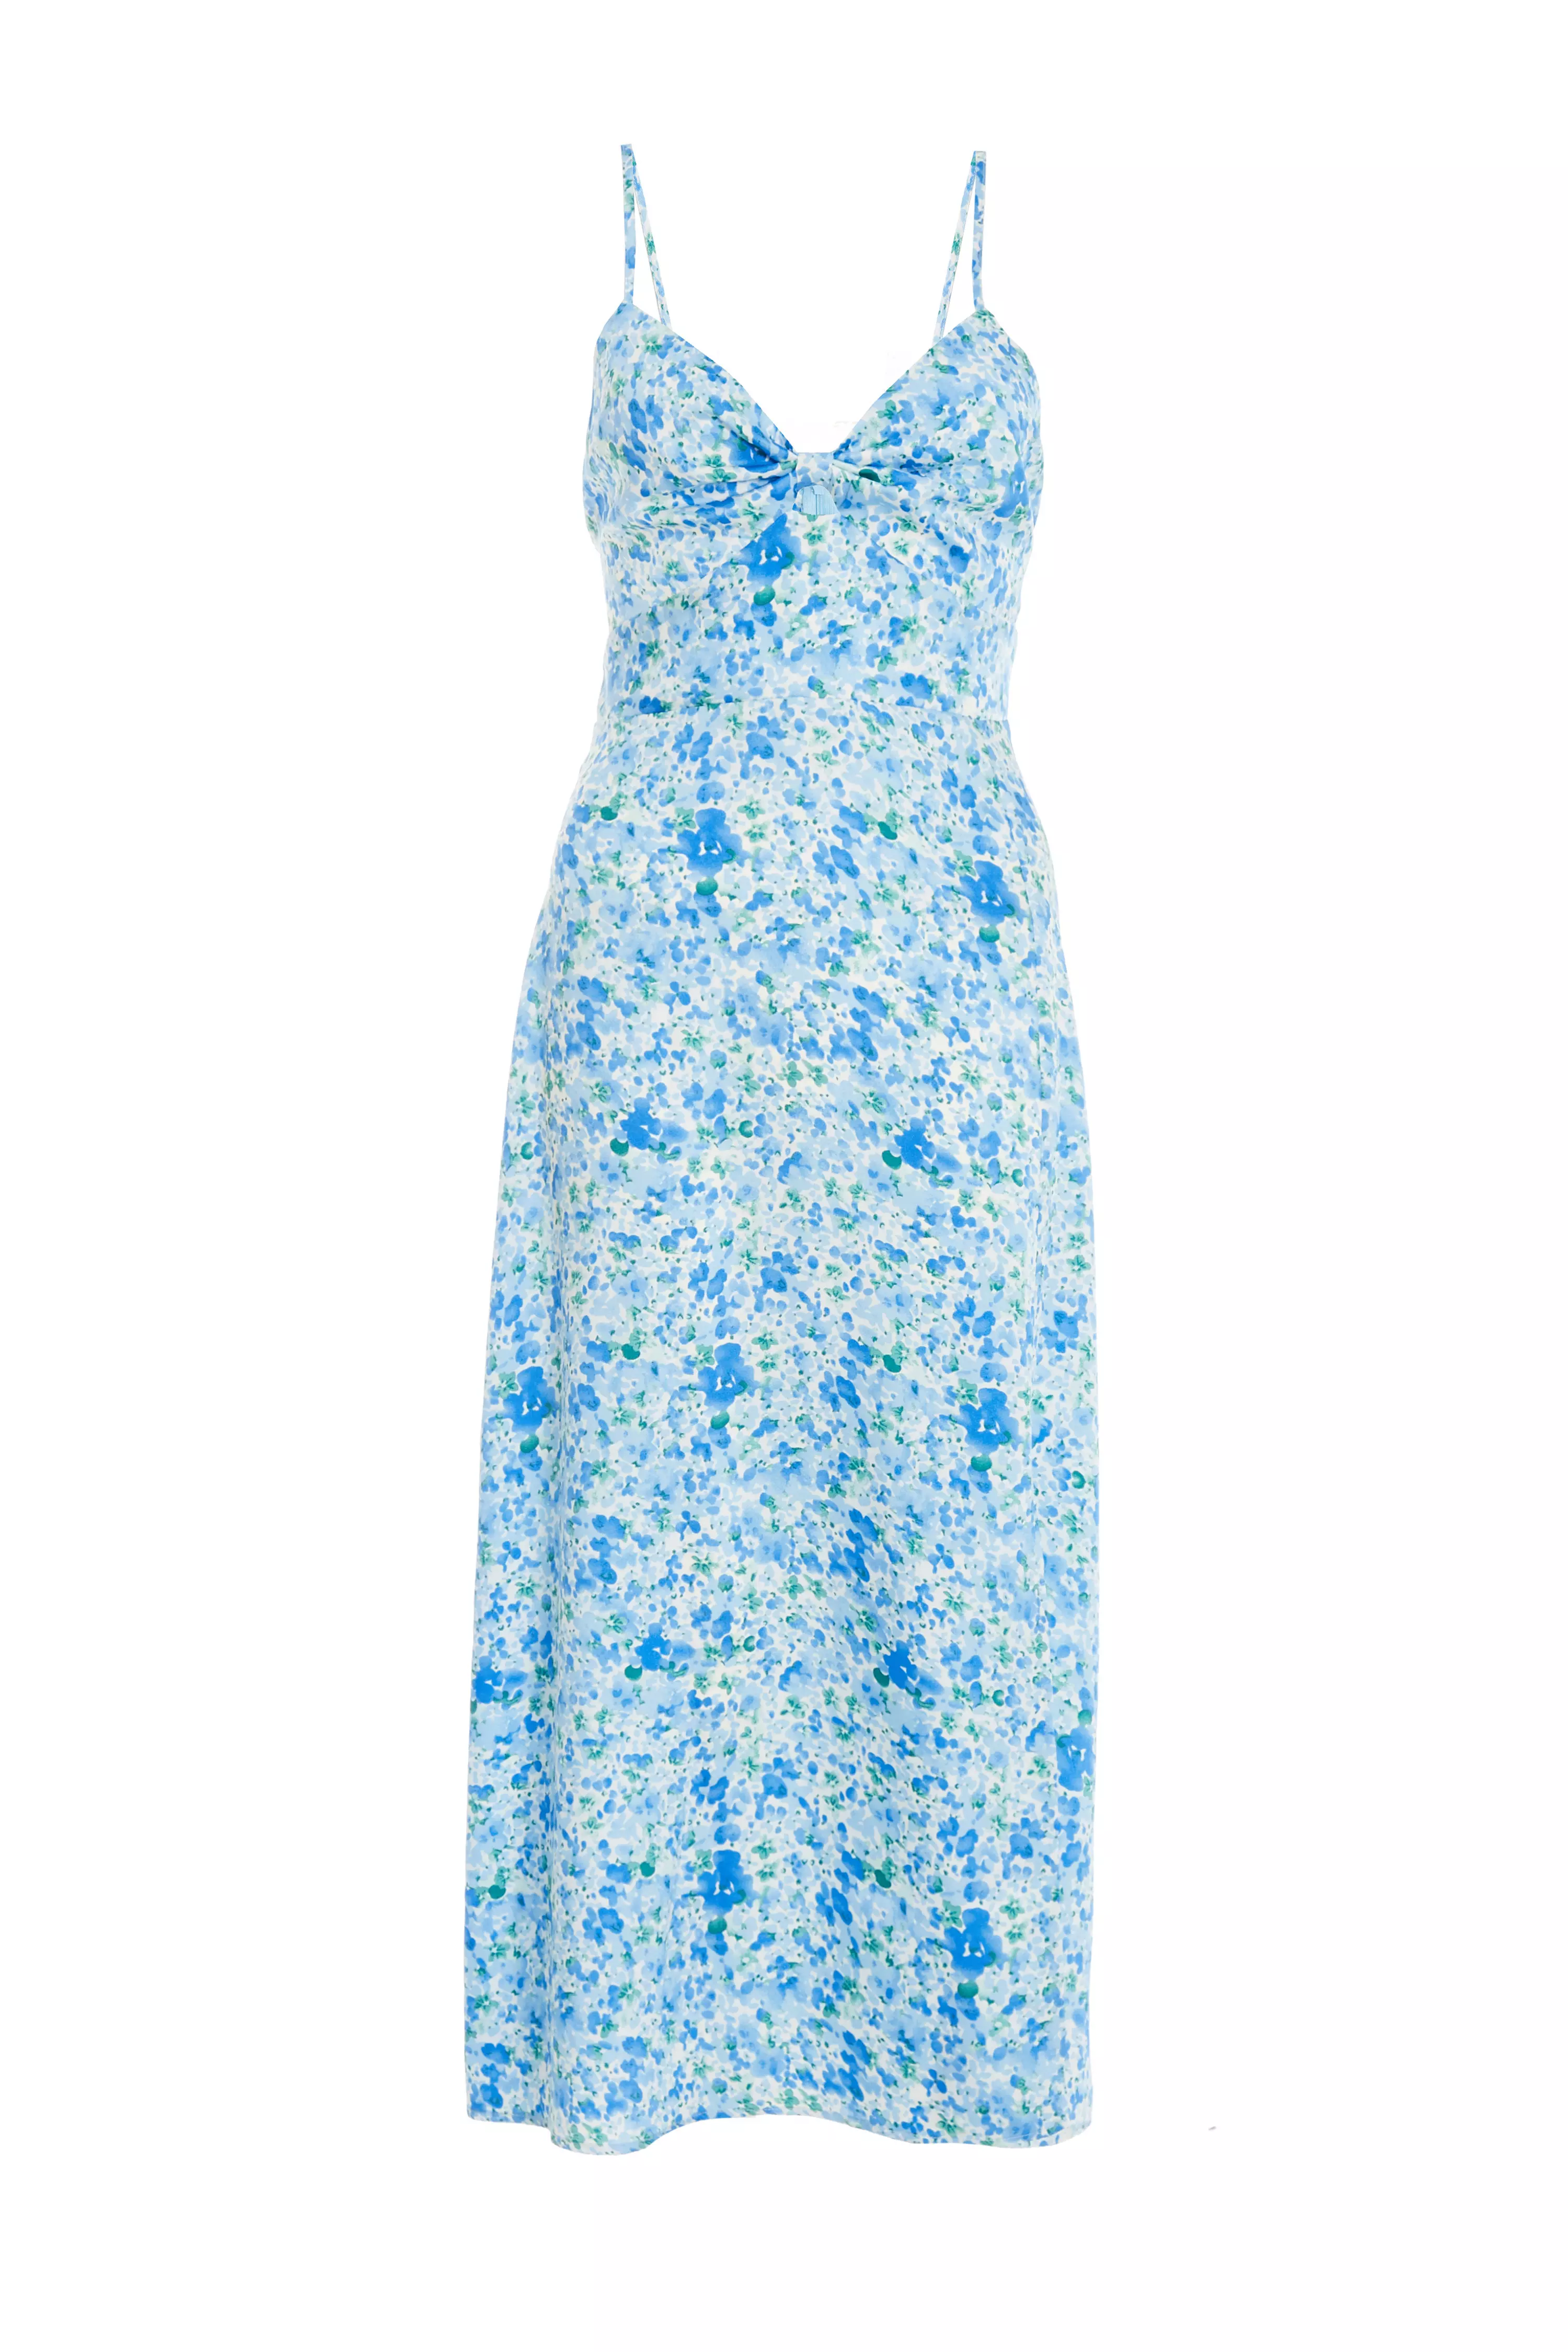 Blue Floral Knot Front Midi Dress - QUIZ Clothing